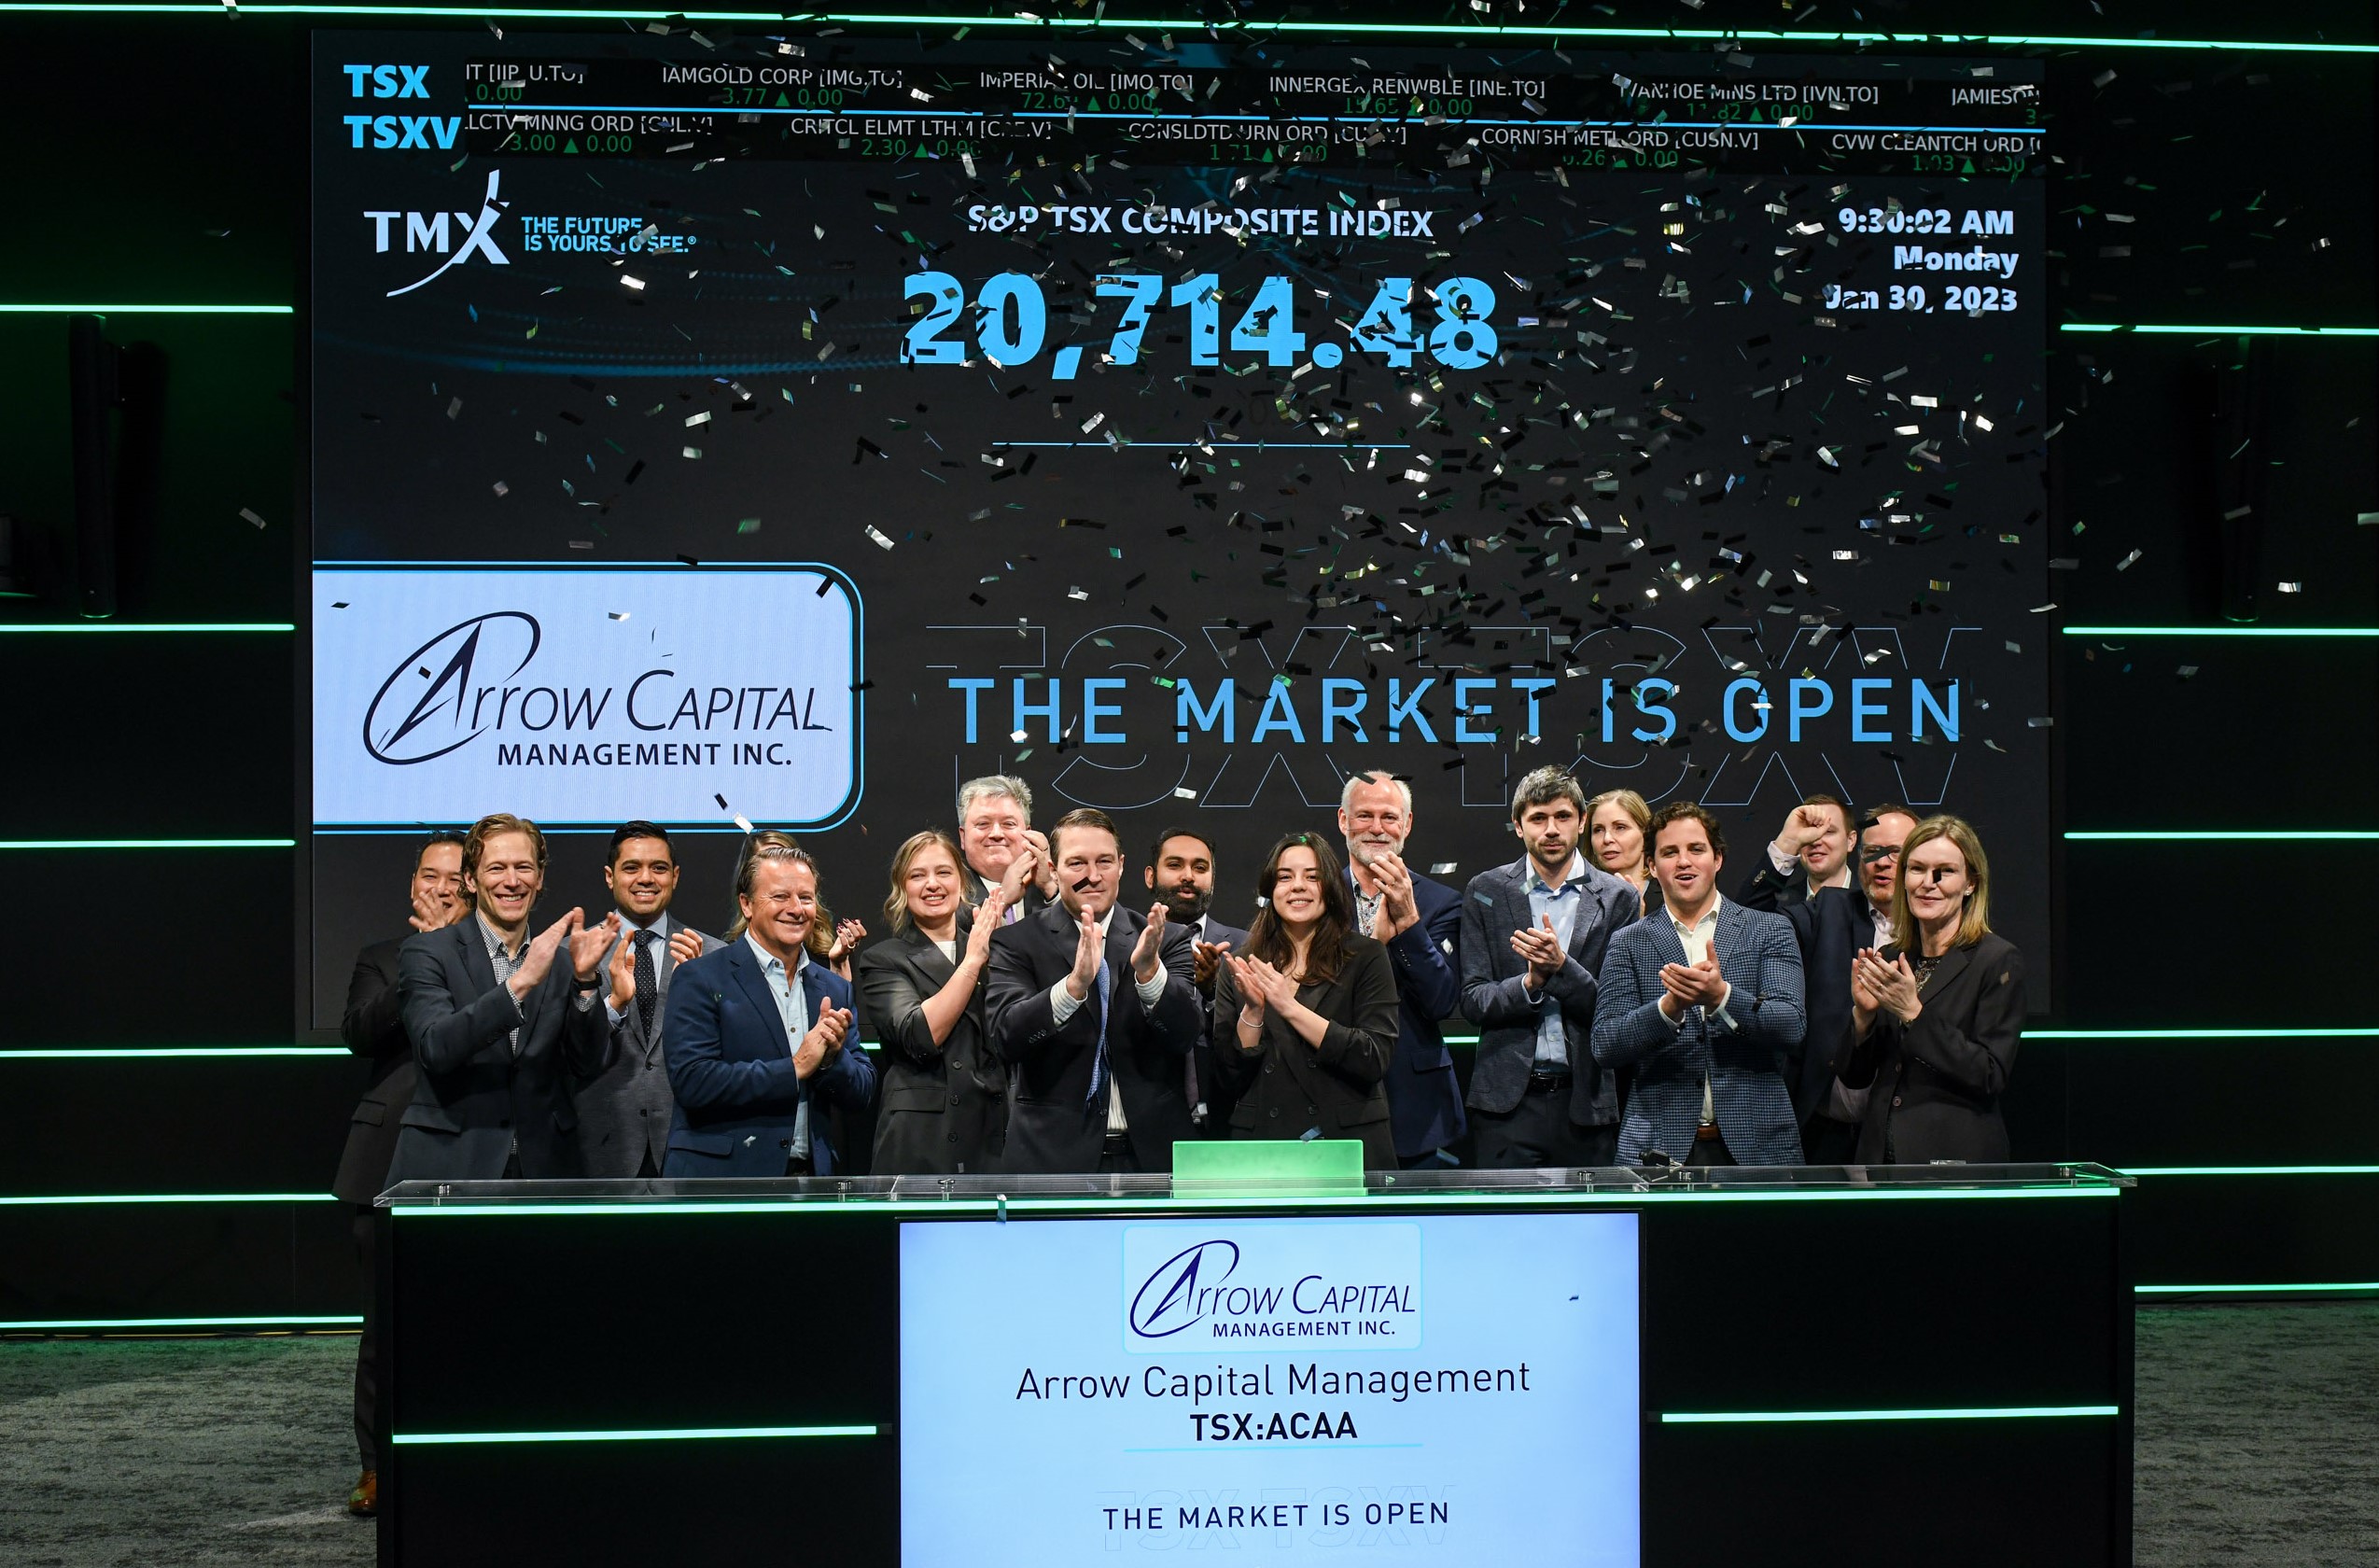 Arrow Capital Management Inc. Opens the TSX